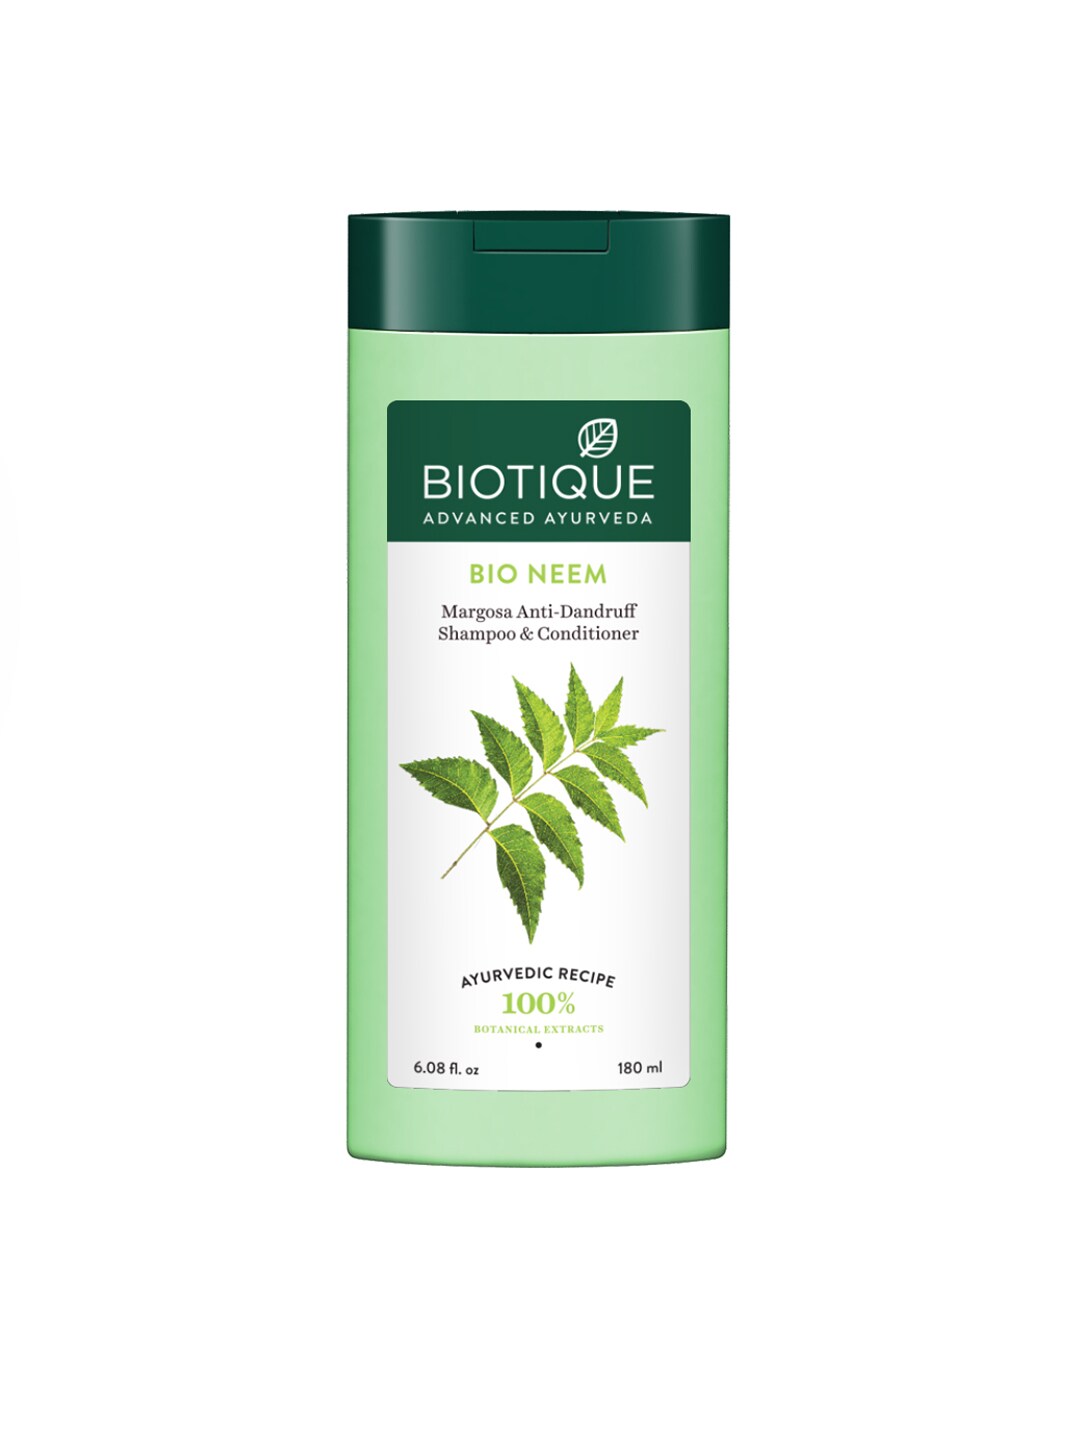 Biotique Bio Neem Margosa Anti-Dandruff Sustainable Shampoo & Conditioner 180 ml Price in India